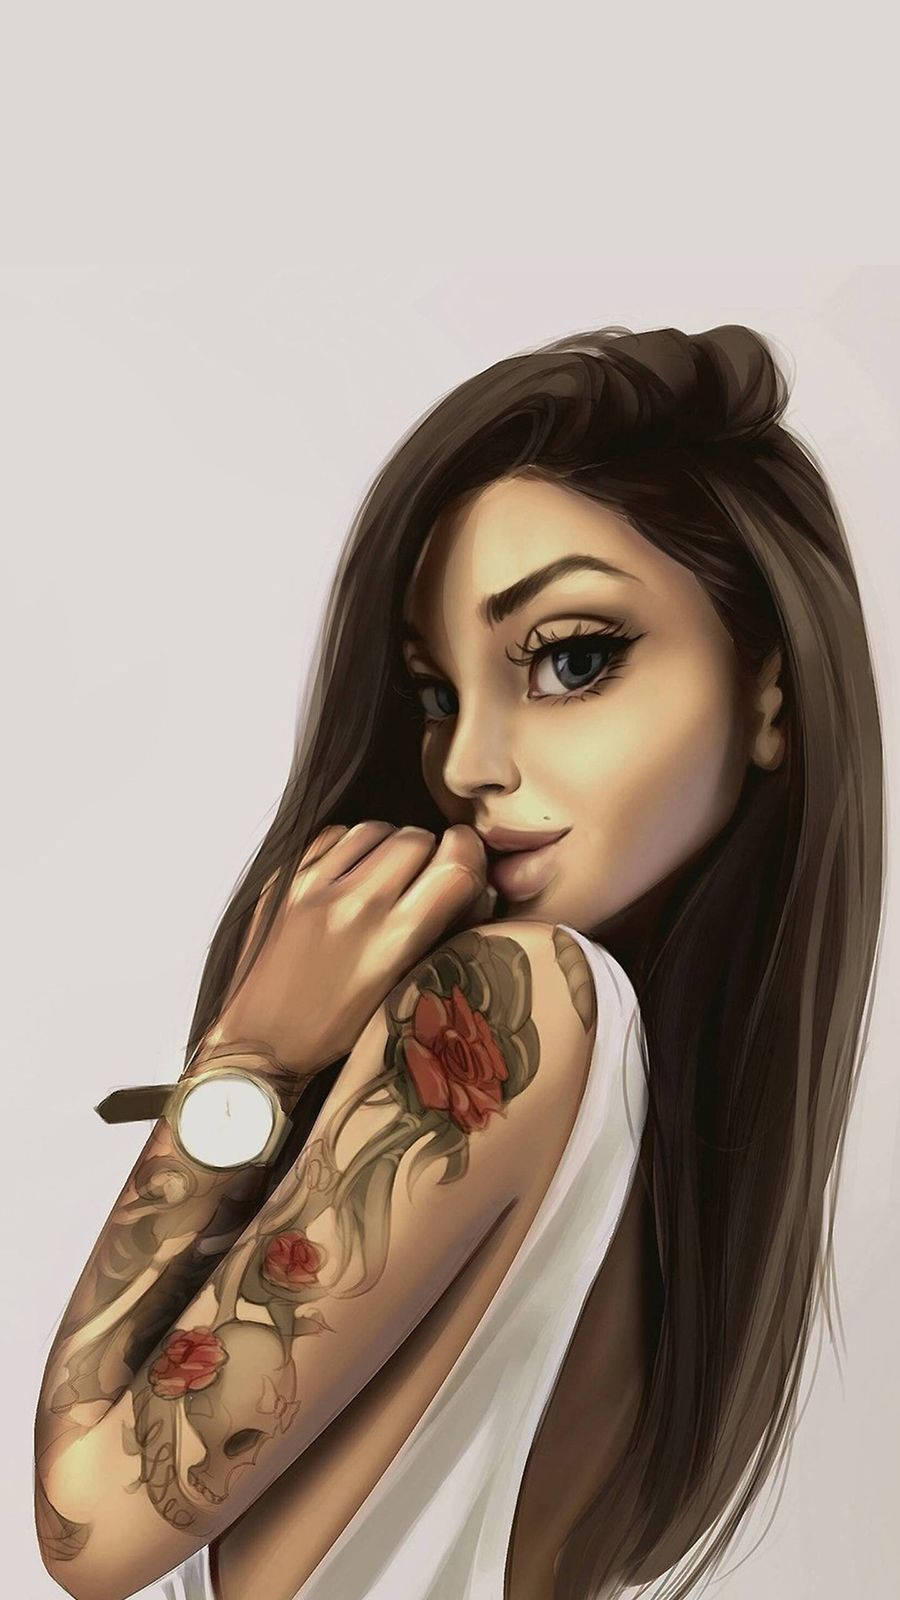 Cool Girl Cartoon With Tattoos